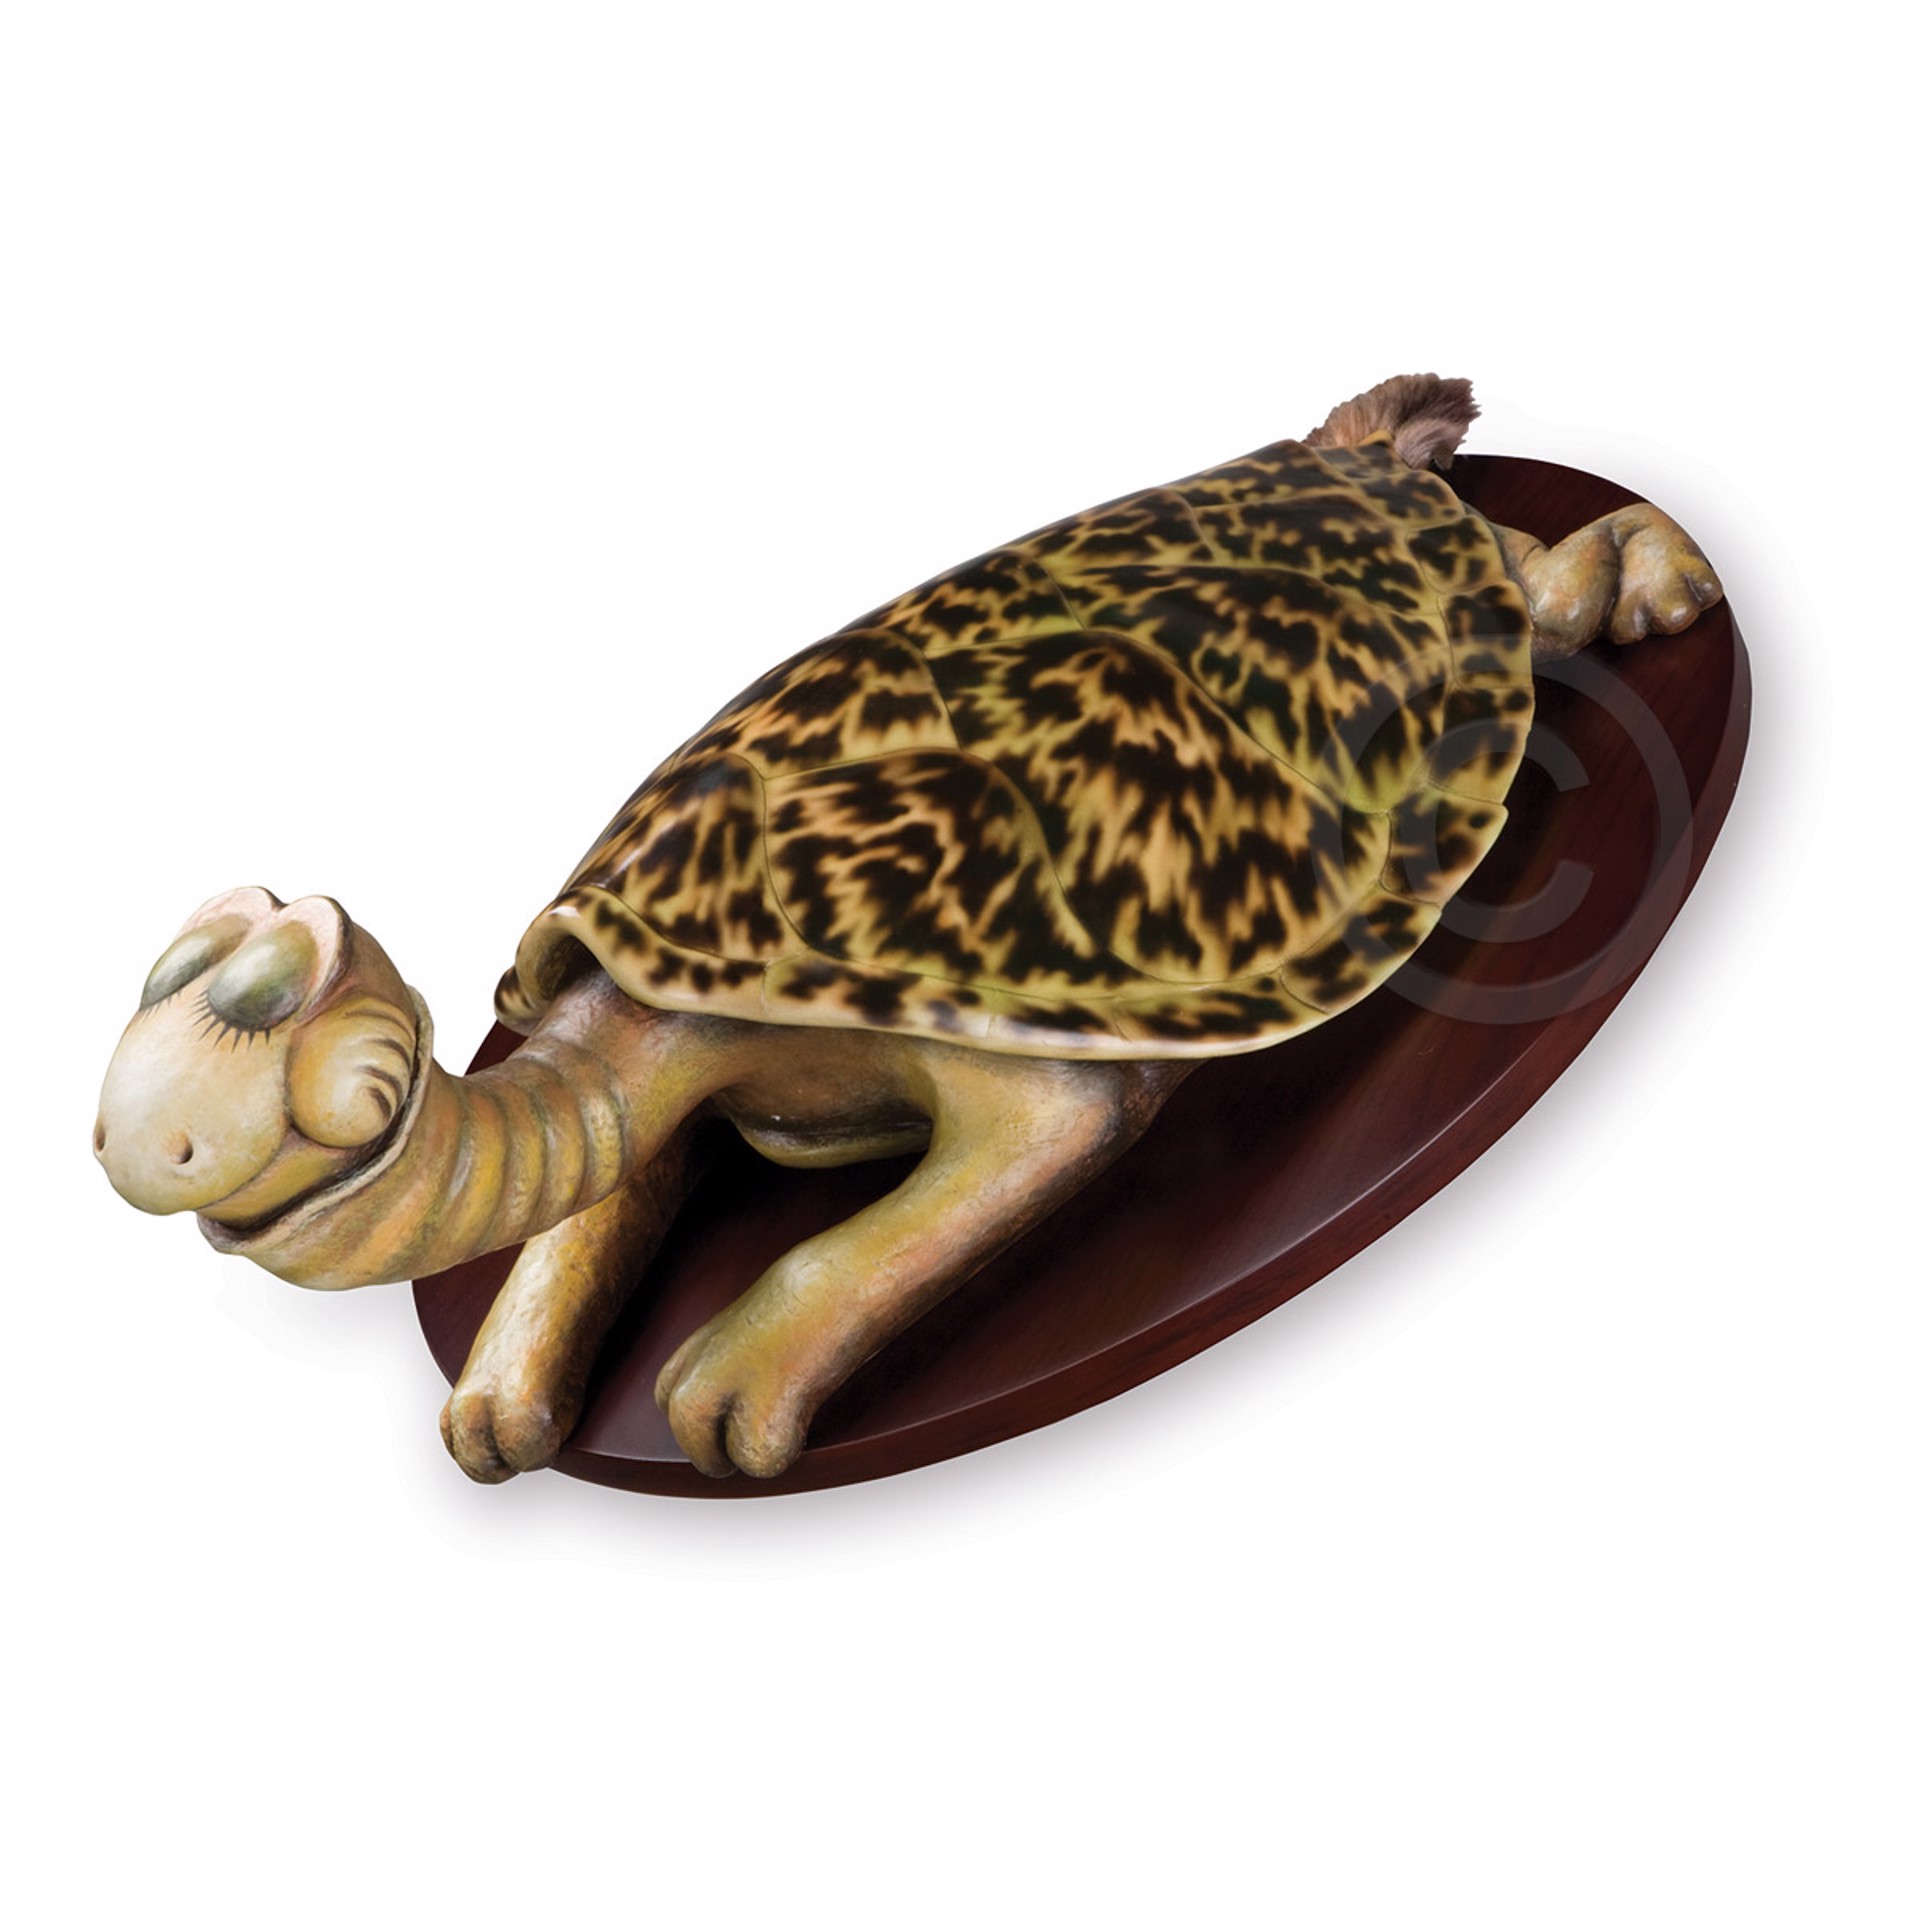 Turtle-Necked Sea-Turtle by Theodor Seuss Geisel